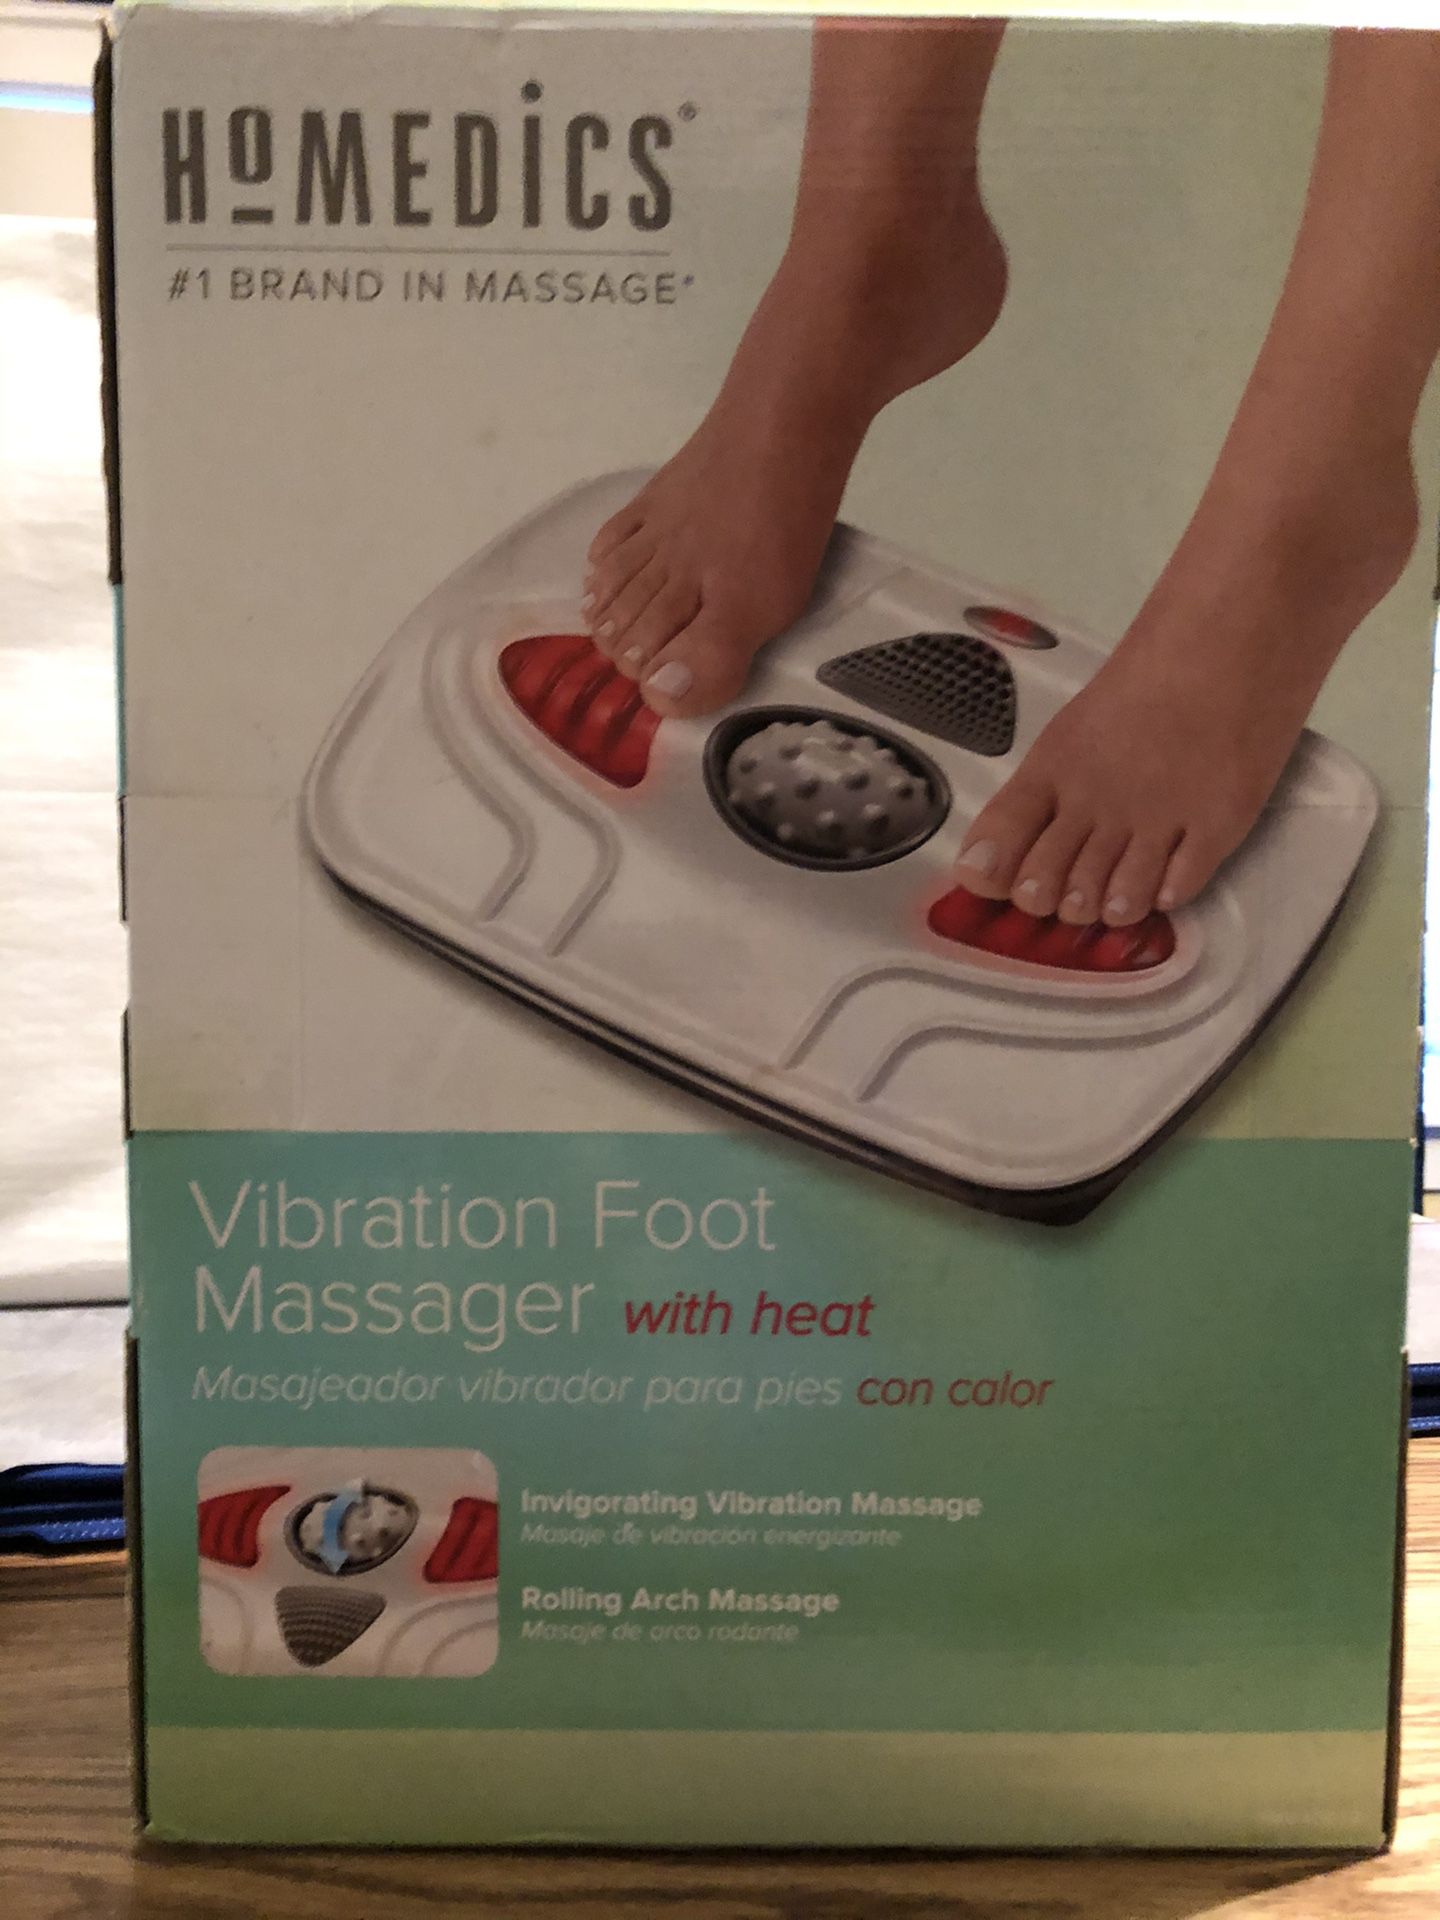 Unopened Homedics vibration foot massager